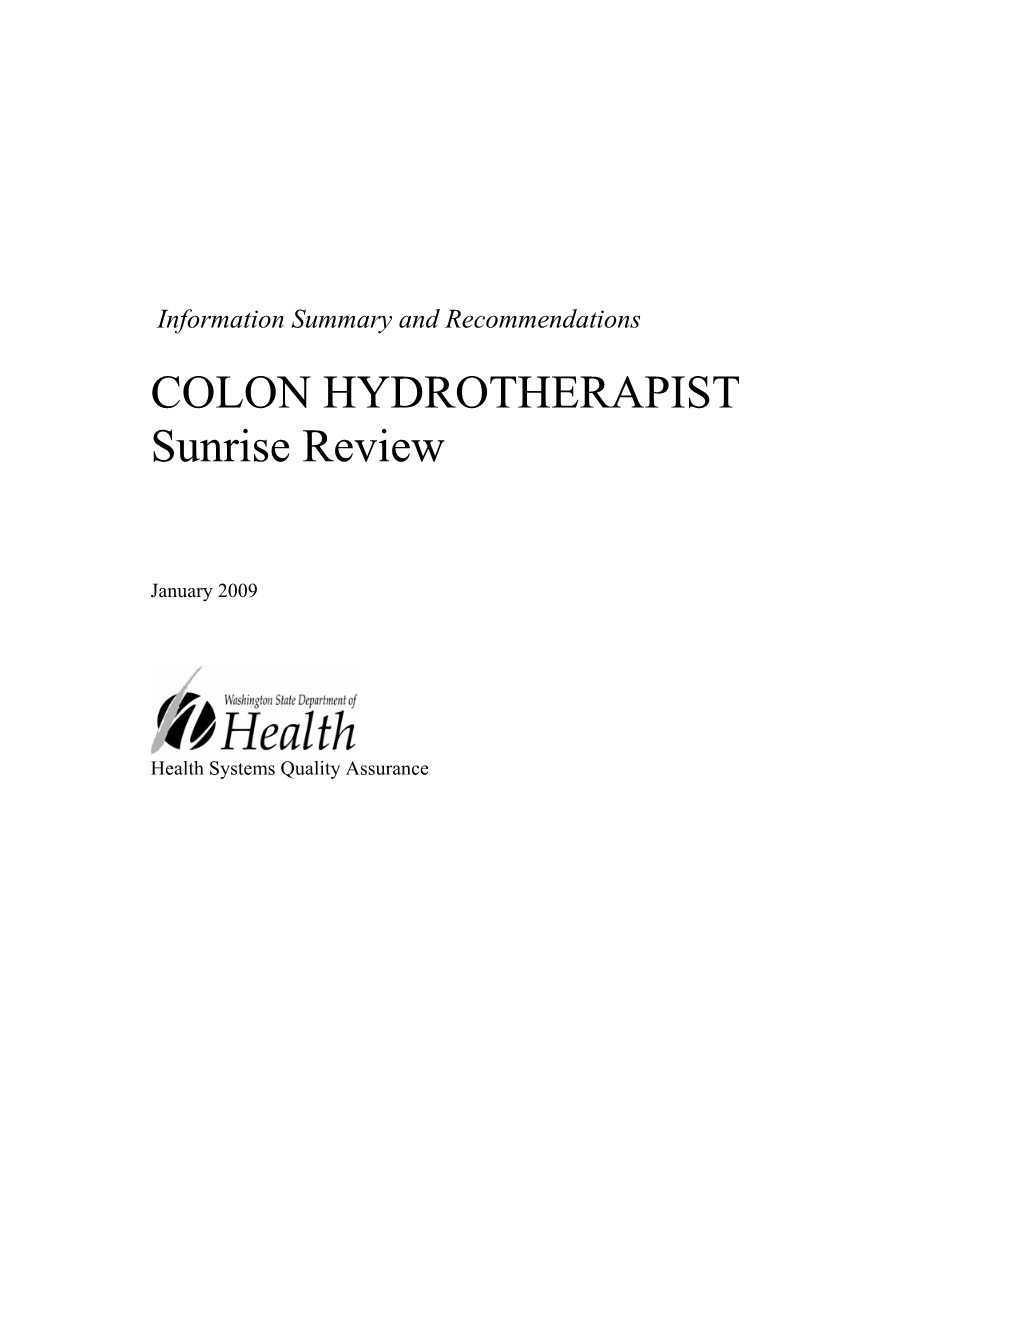 COLON HYDROTHERAPIST Sunrise Review